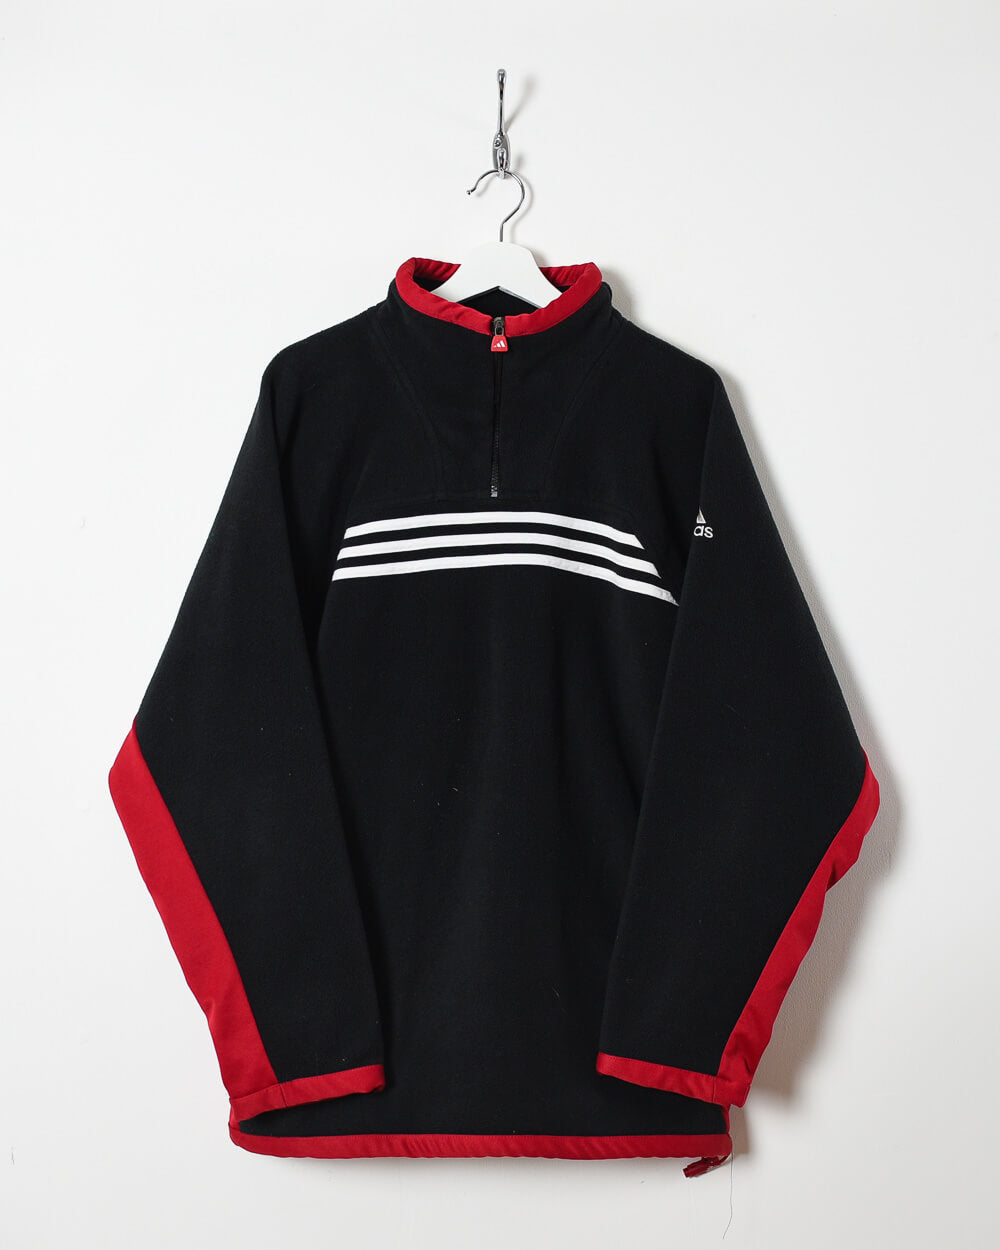 Black Adidas 1/4 Zip Fleece - X-Large